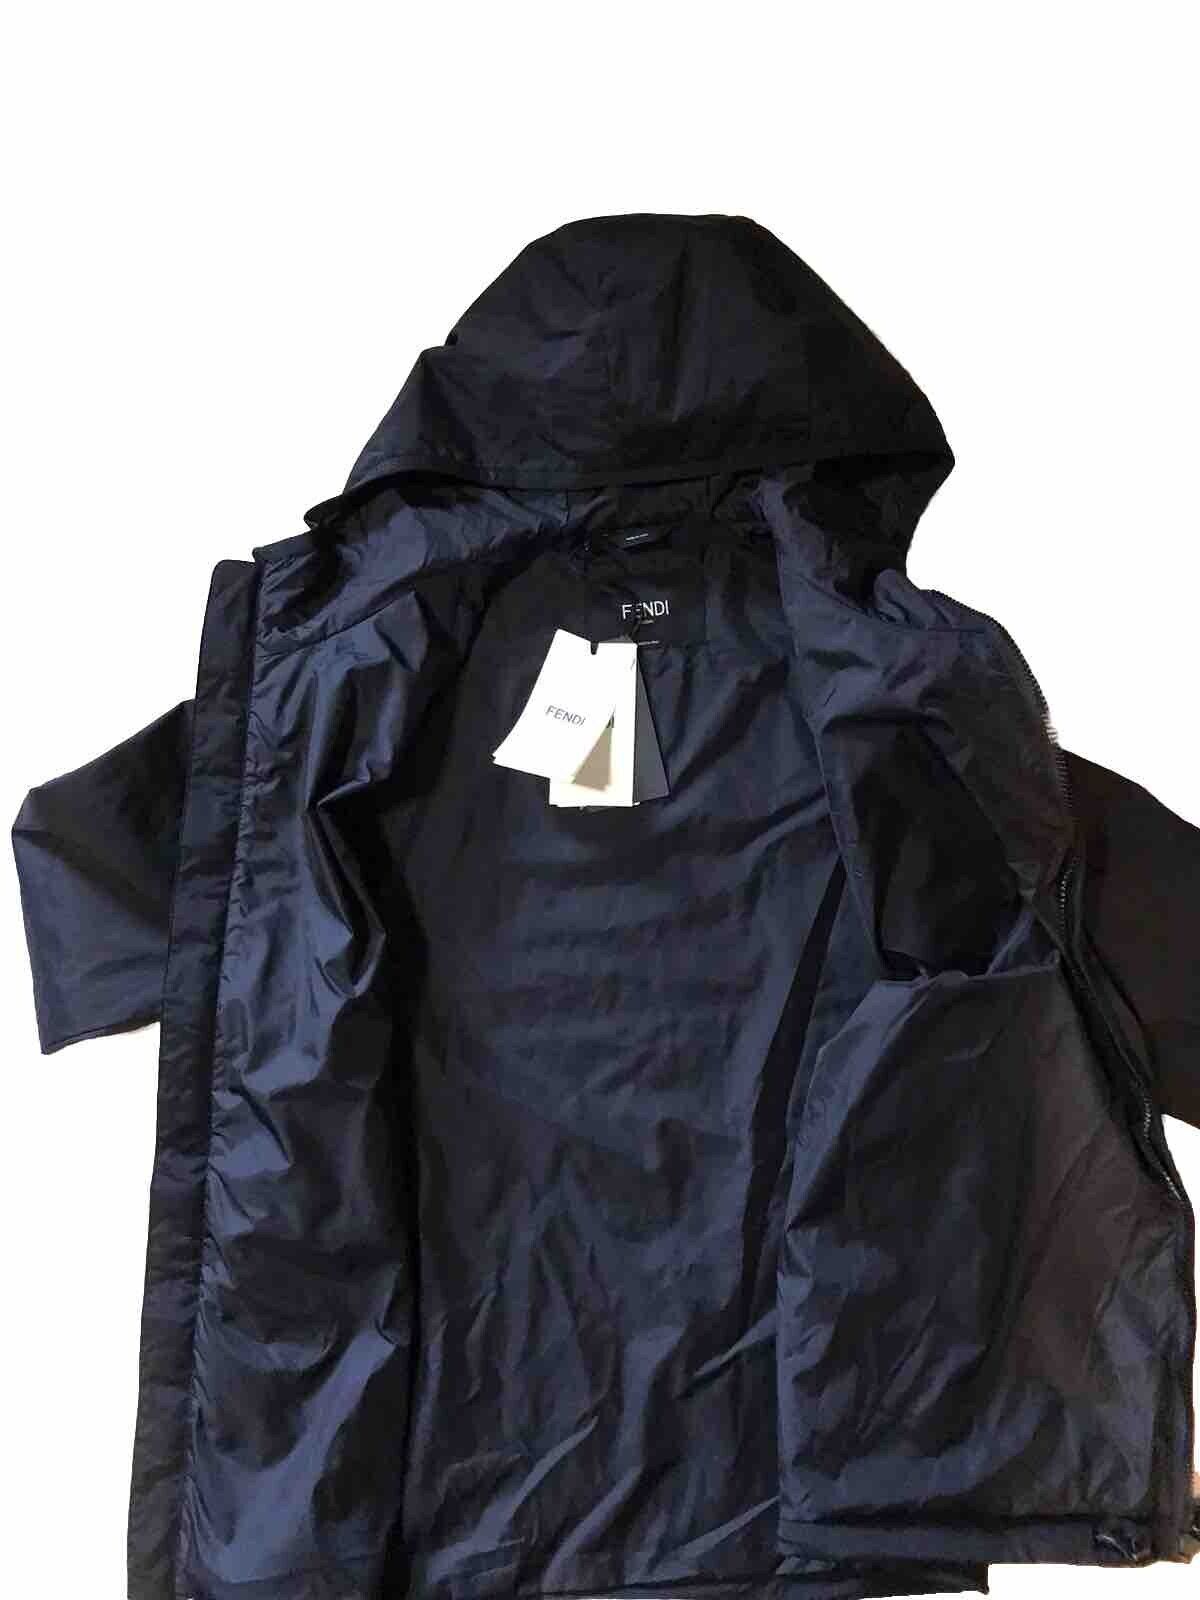 New $2350 Fendi Men’s Windbreaker Coat Black Size 38 US/48 It Italy